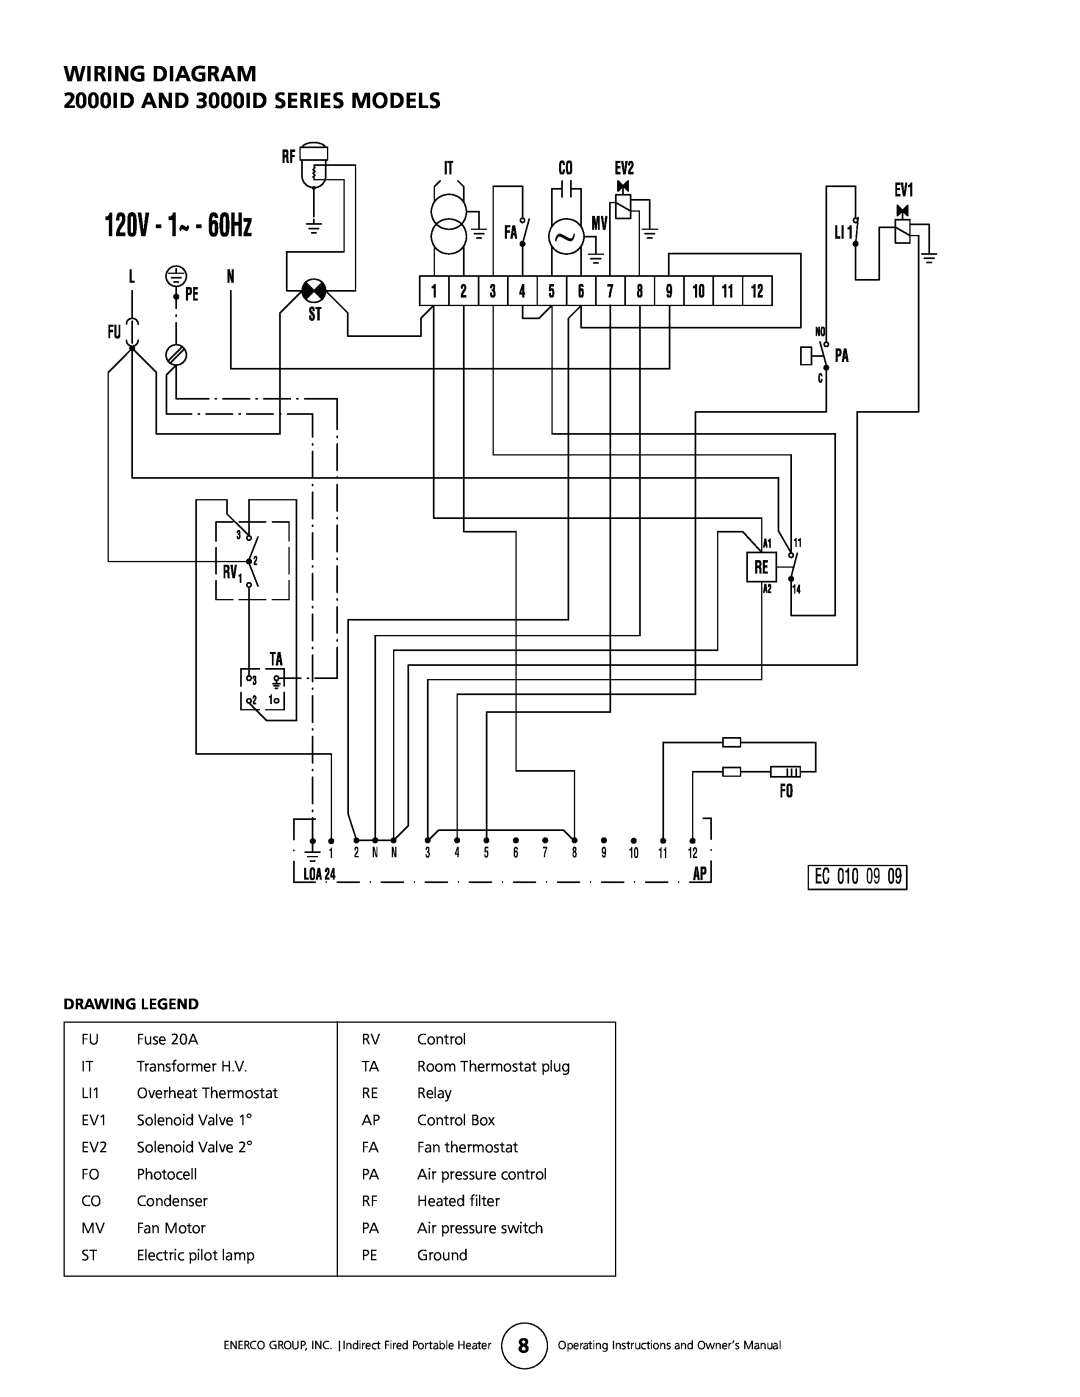 Enerco 4000ID, 2000ID 3000ID, 1000ID owner manual Wiring Diagram 2000ID and 3000ID Series Models 